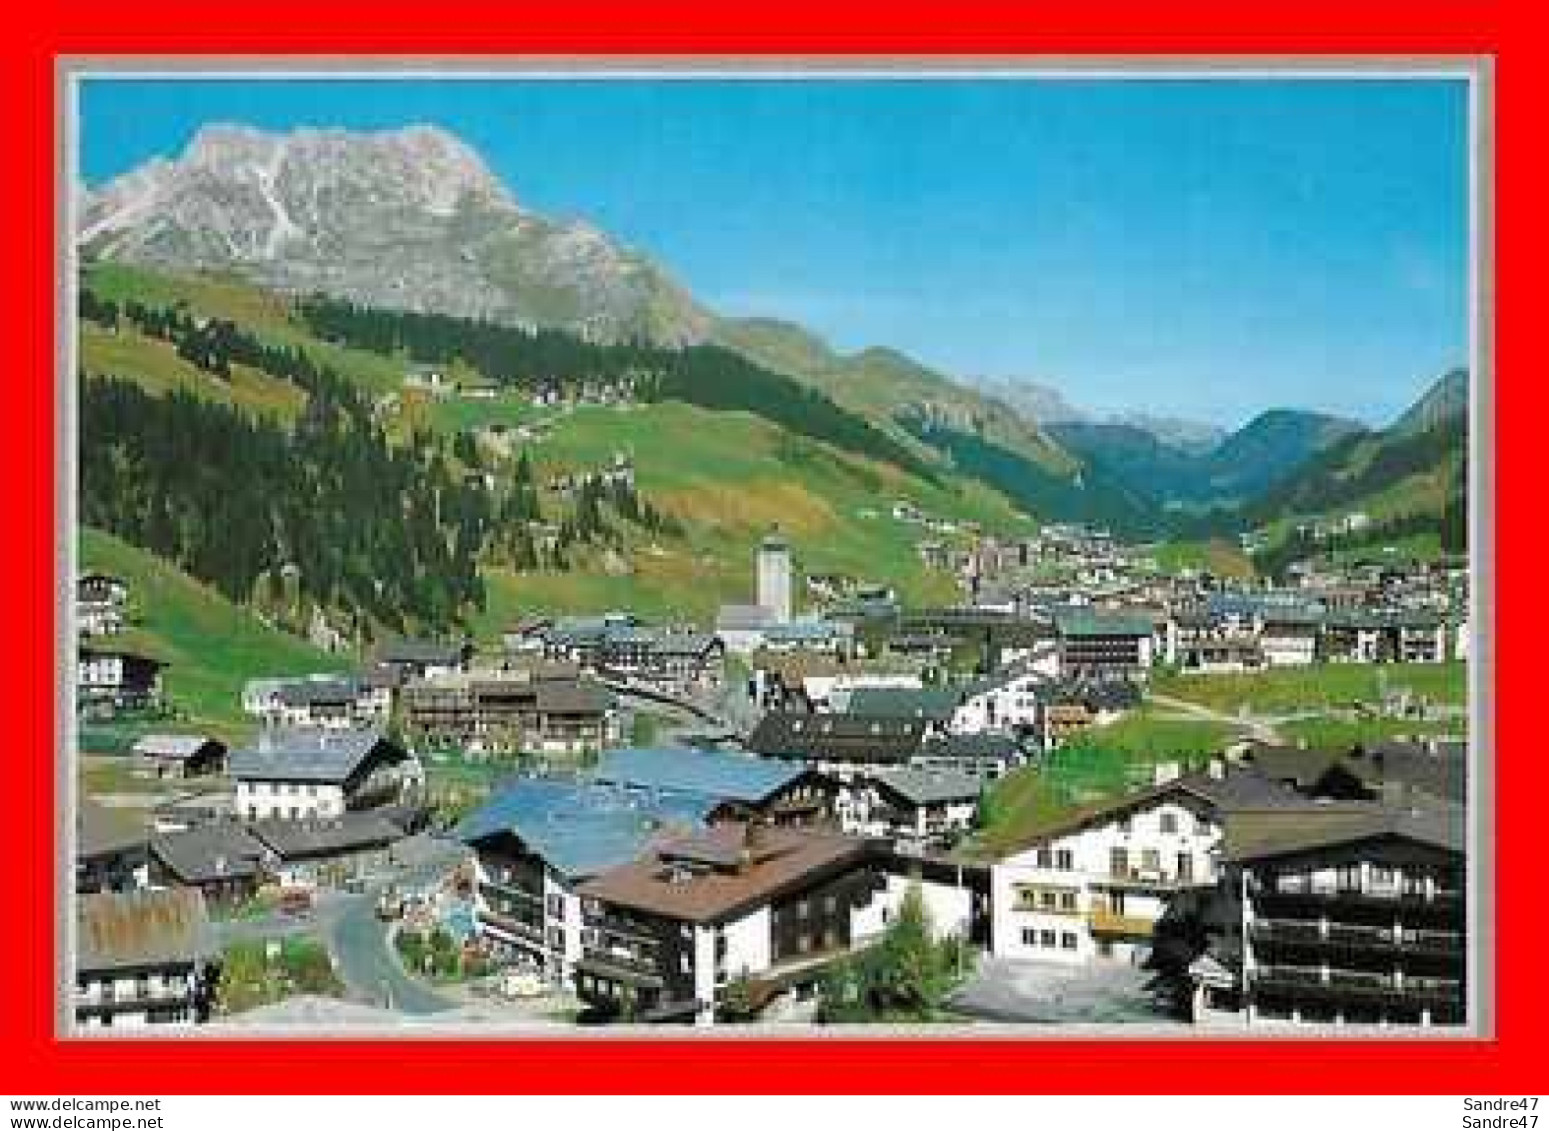 CPSM/gf  LECH (Autriche).  Gegen Karhorn 2416 M. ..*425 - Lech